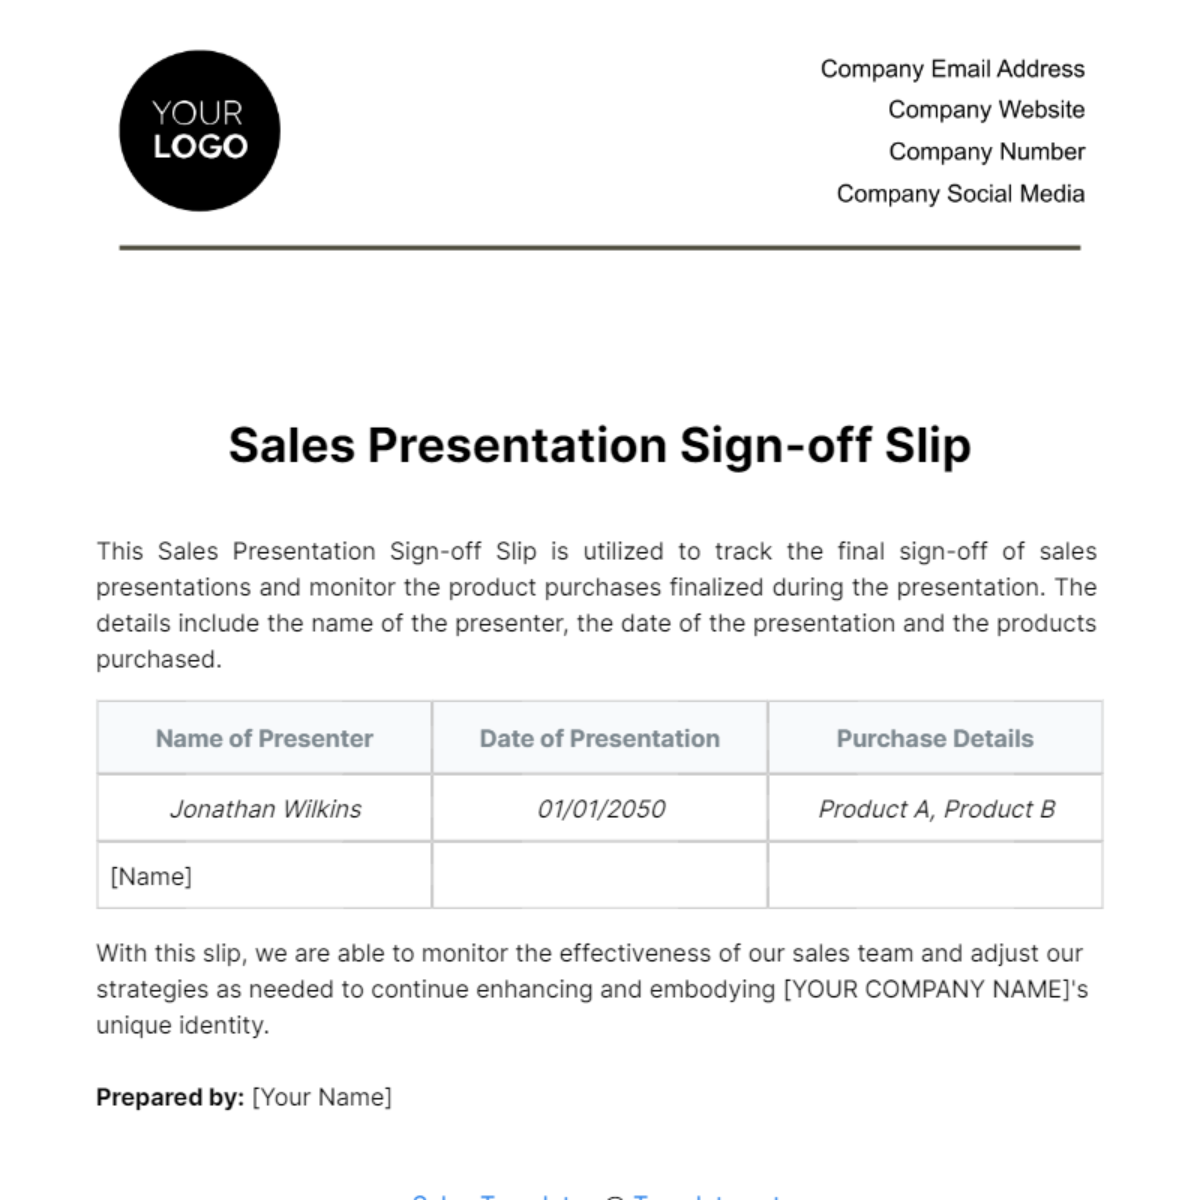 Free Sales Presentation Sign-off Slip Template